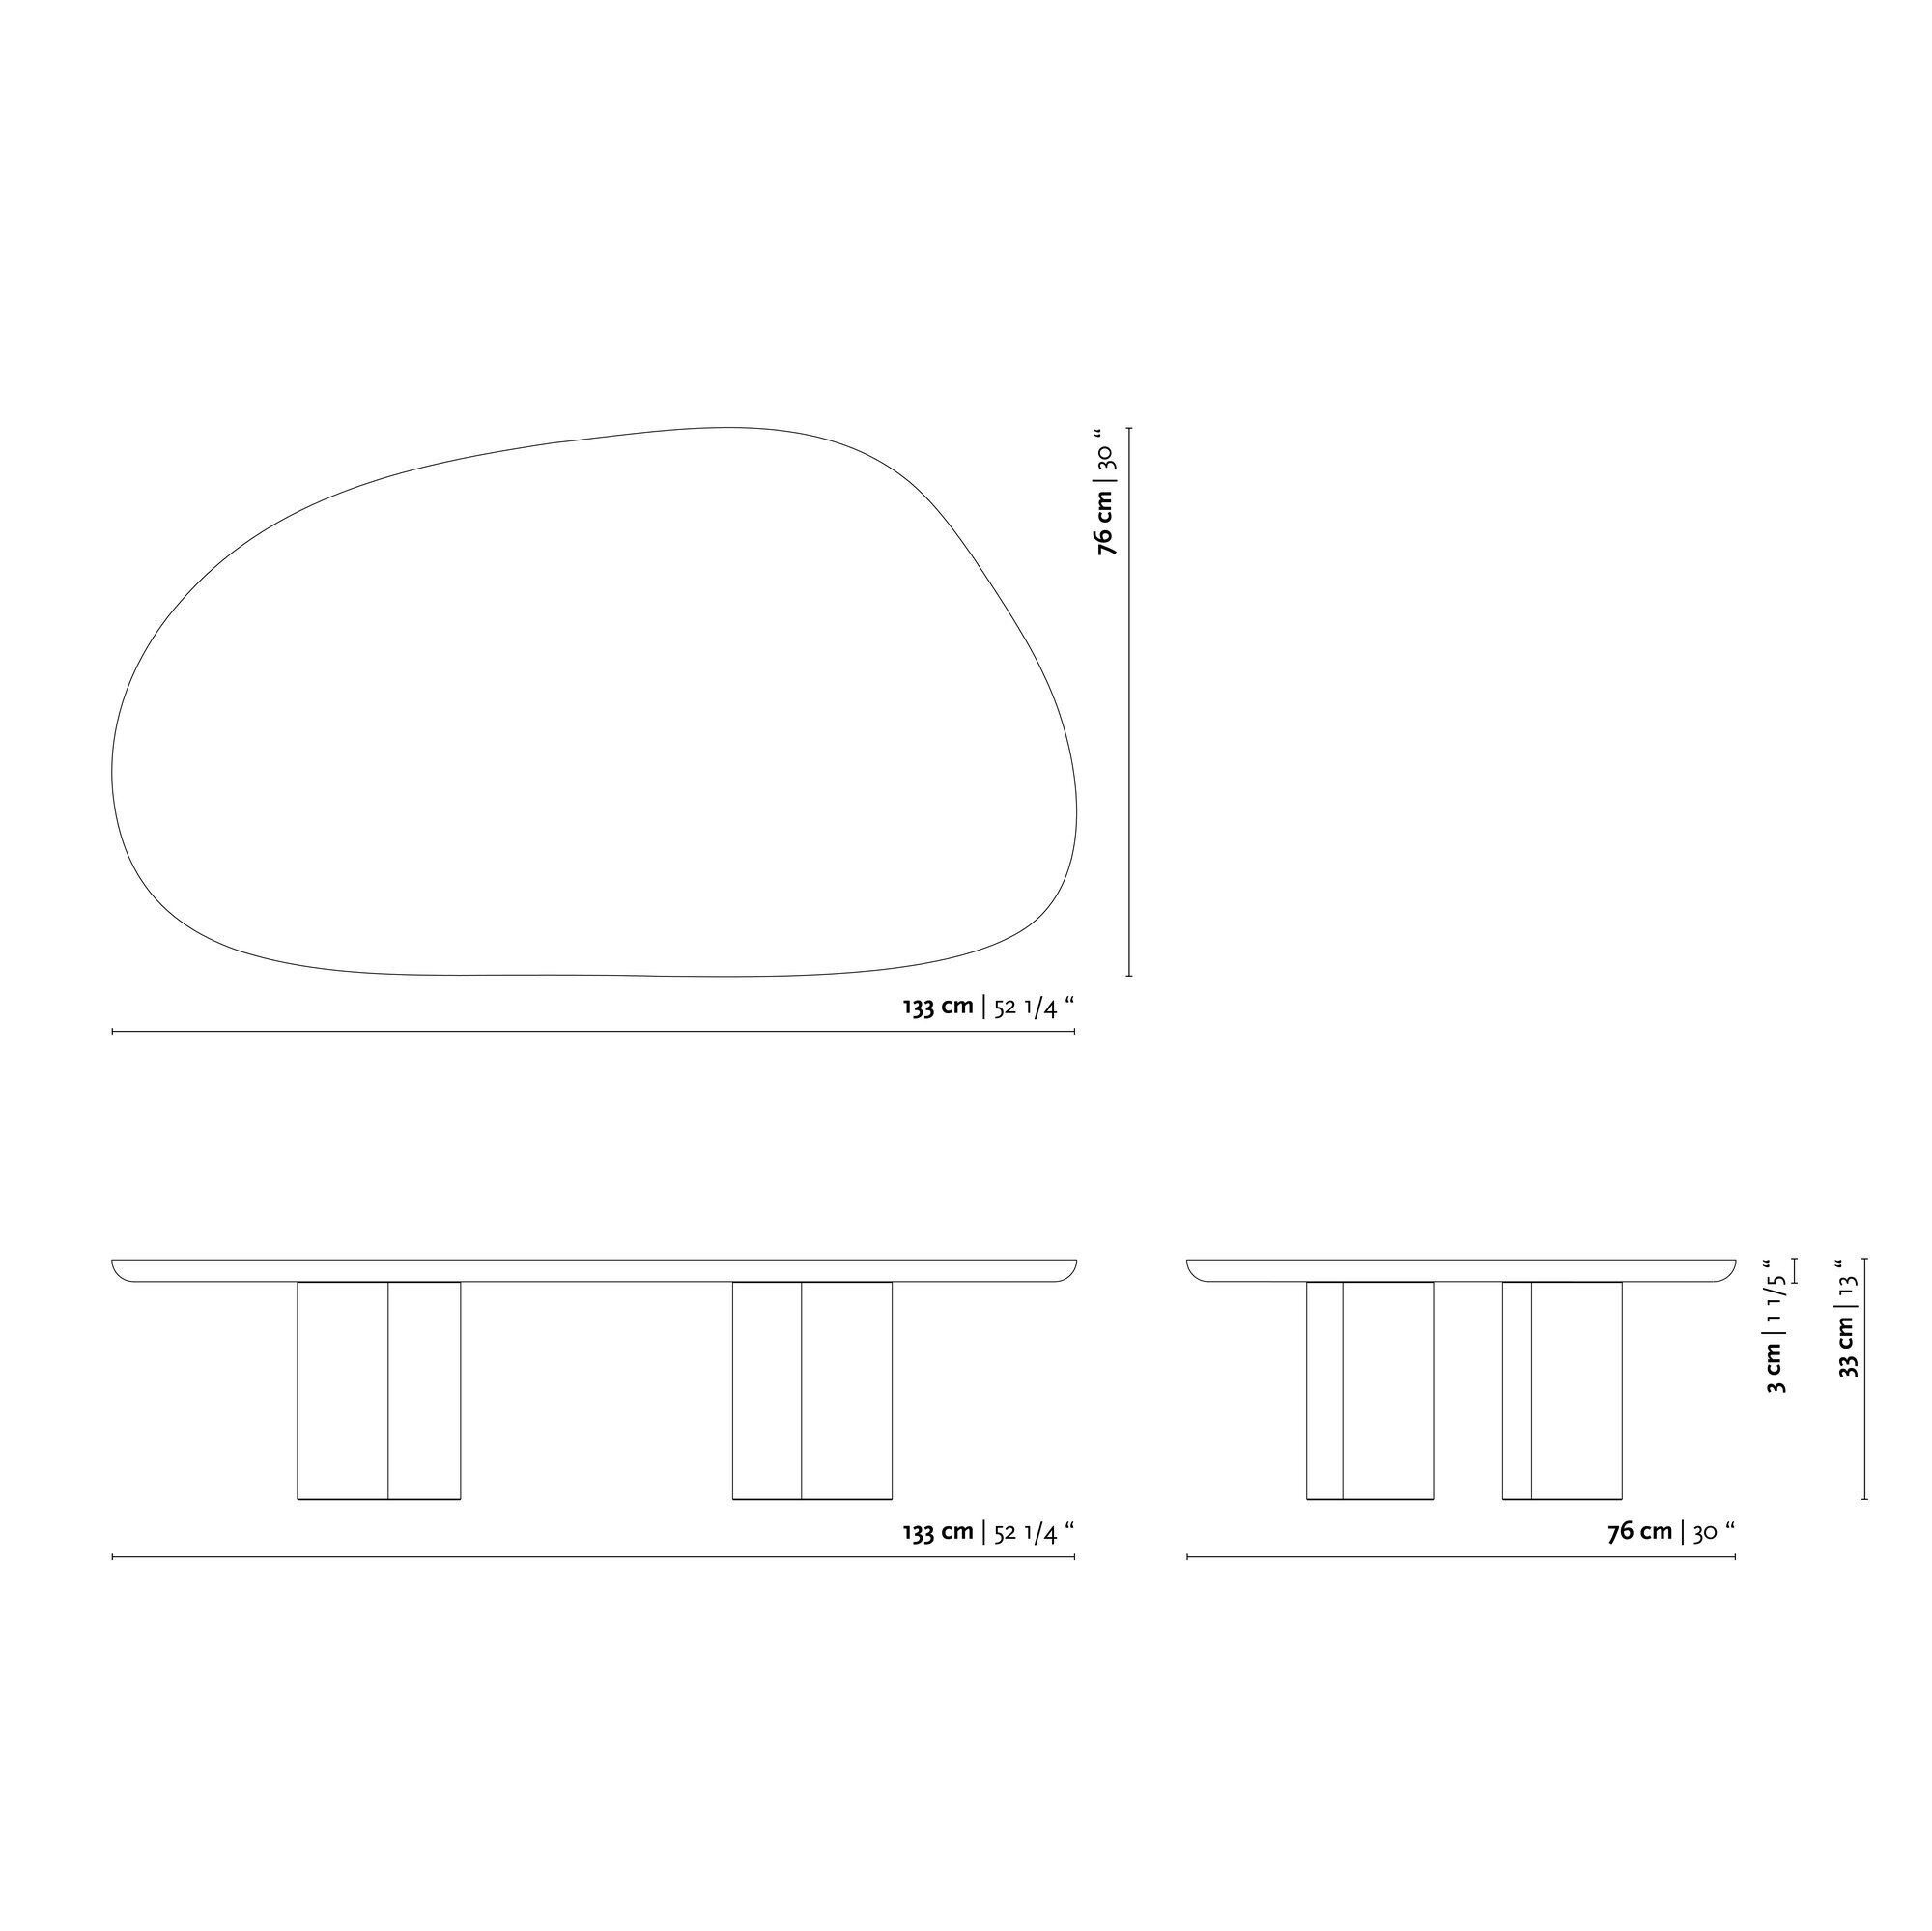 Design Coffee Table | Blob Coffee Table Walnut naturel lacquer | Walnut naturel lacquer | Studio HENK| 